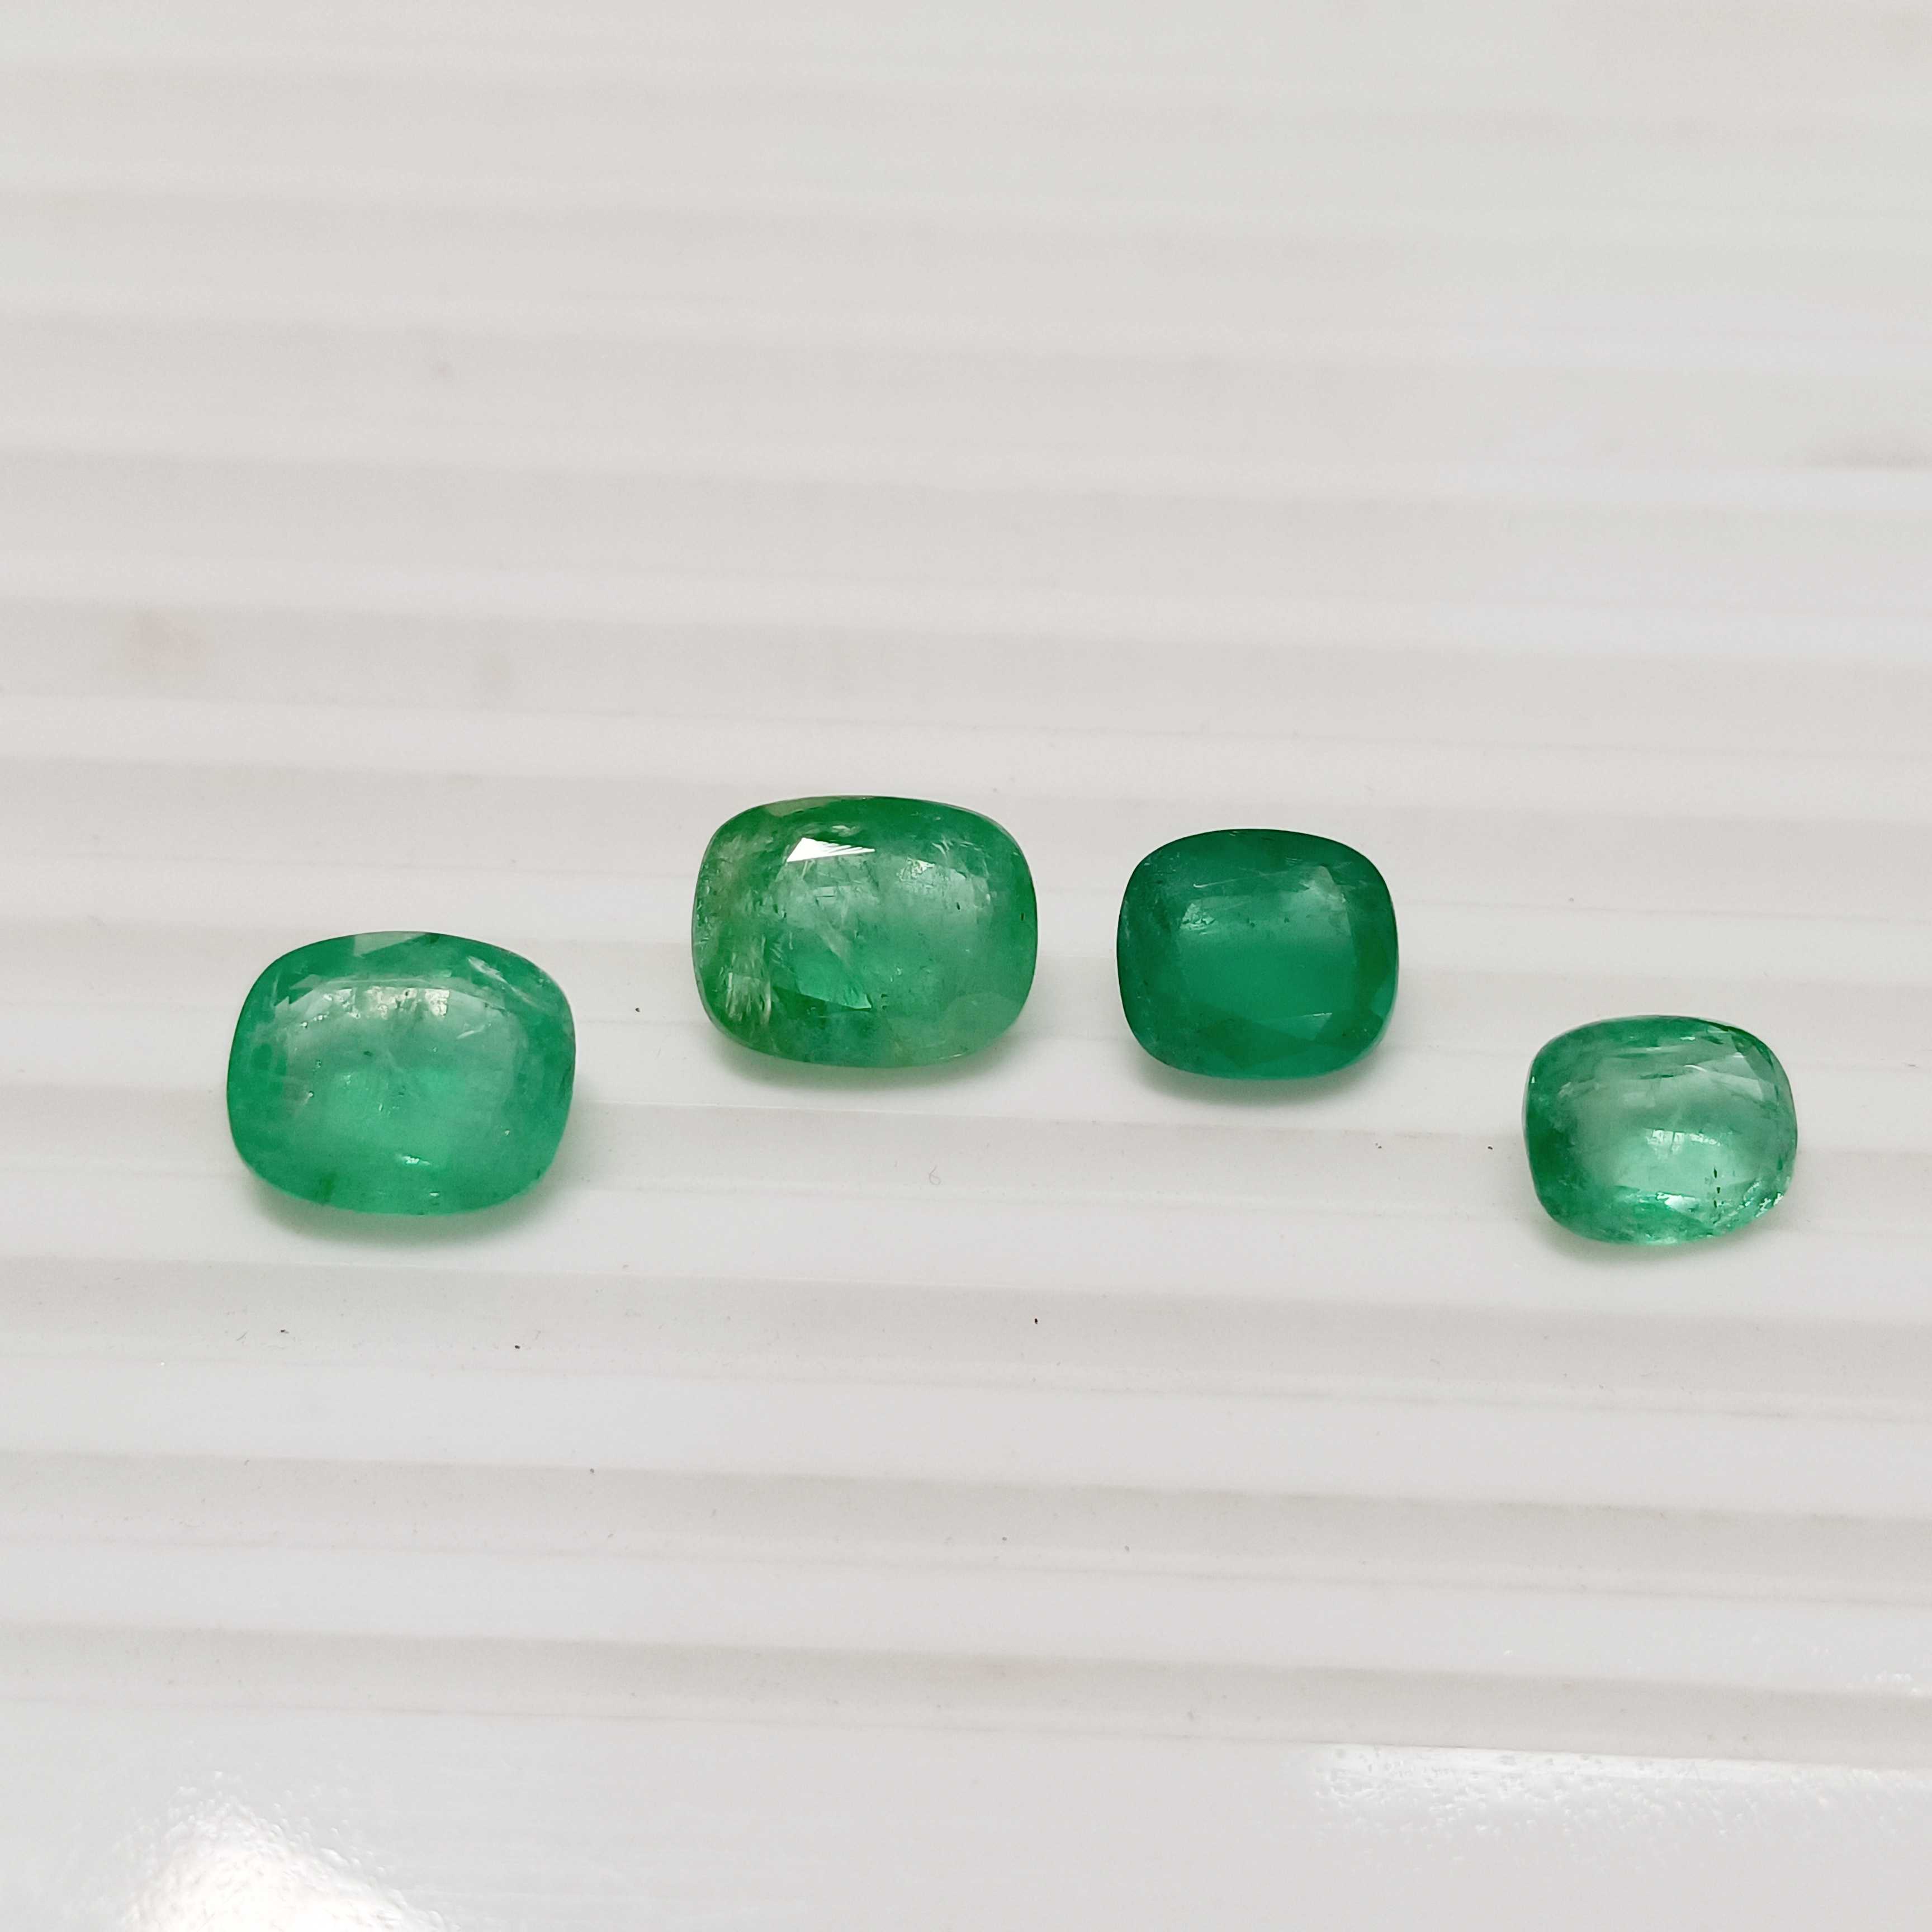 13.75ct medium green cushion cut Ethiopian emerald parcel 